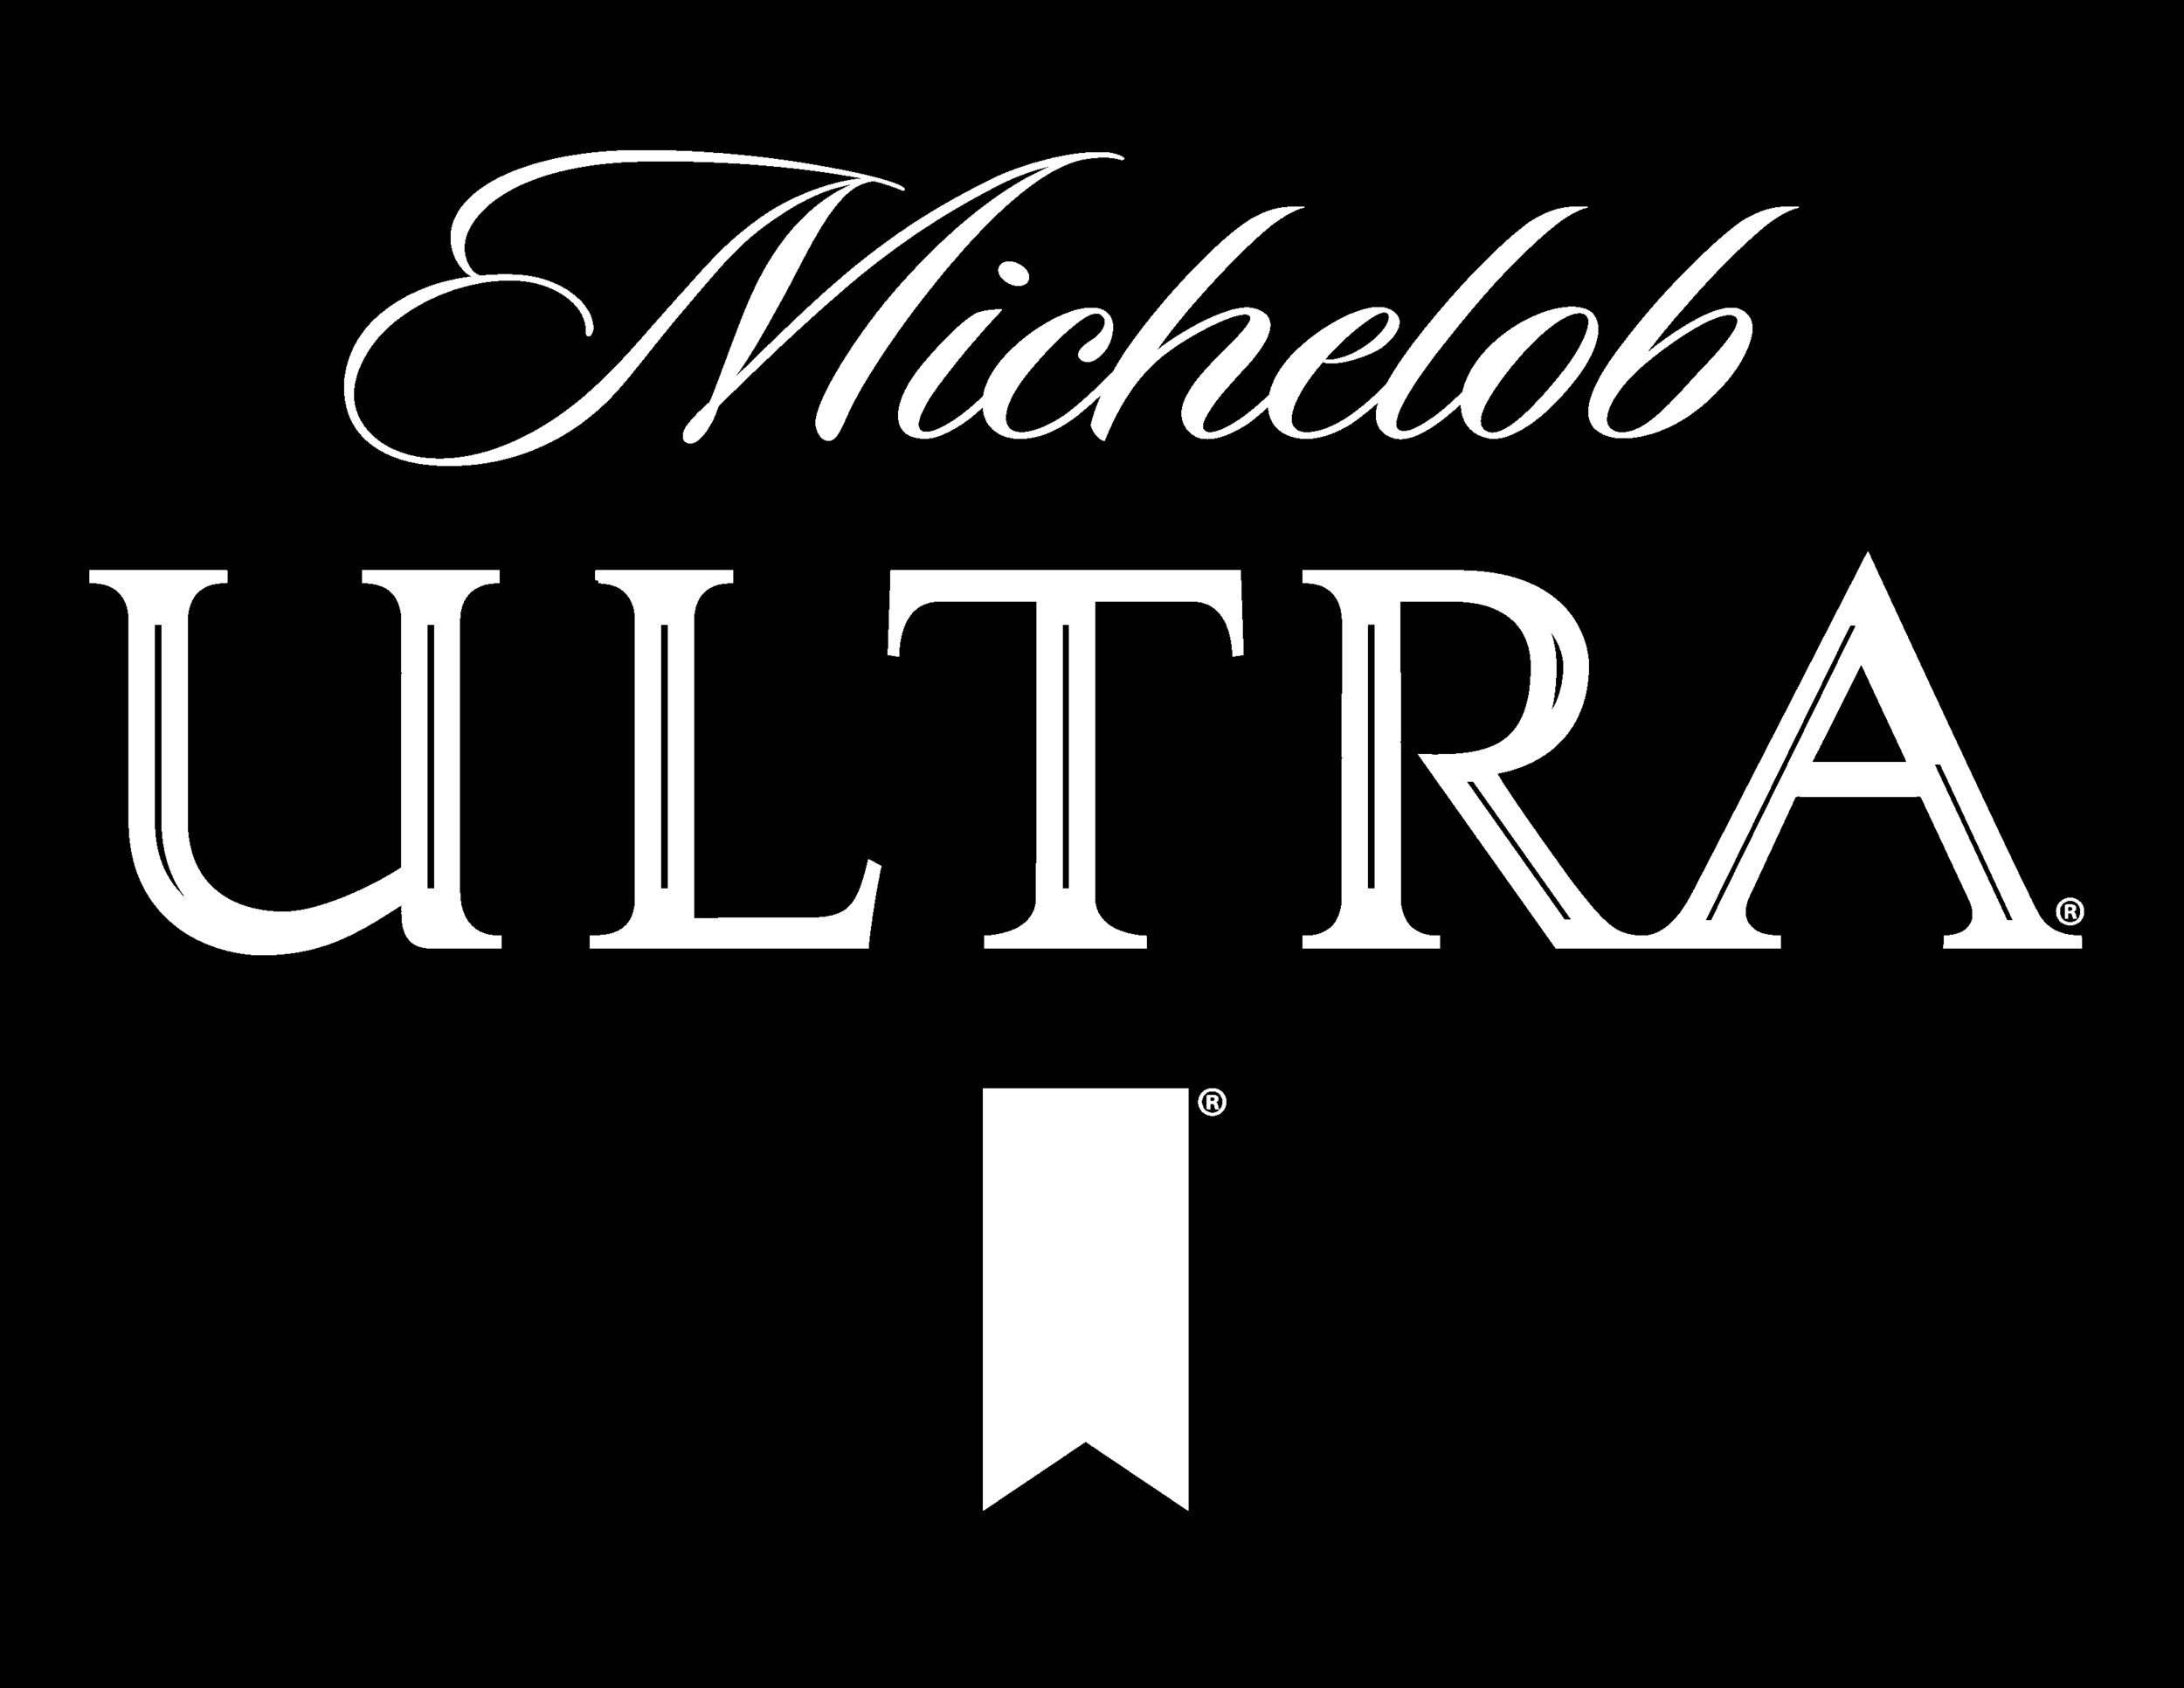 Michelob-ULTRA-logo.png